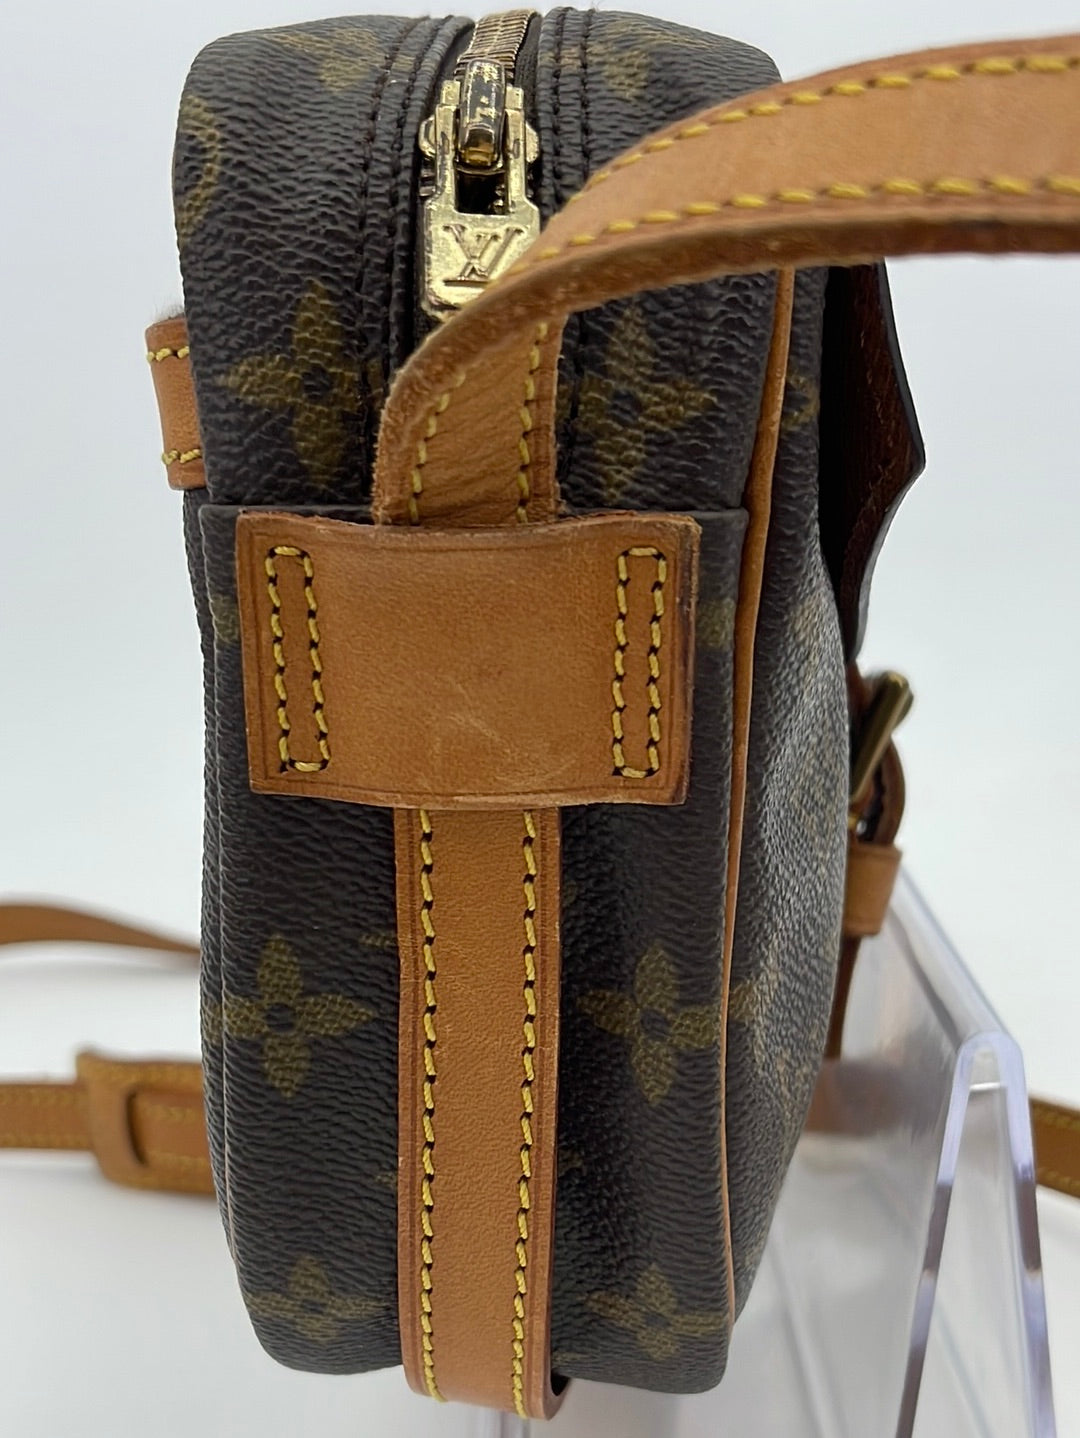 Vintage Louis Vuitton Monogram Jeune Fille PM Crossbody Bag TH0940 061923 $200 OFF NO ADDITIONAL DISCOUNTS